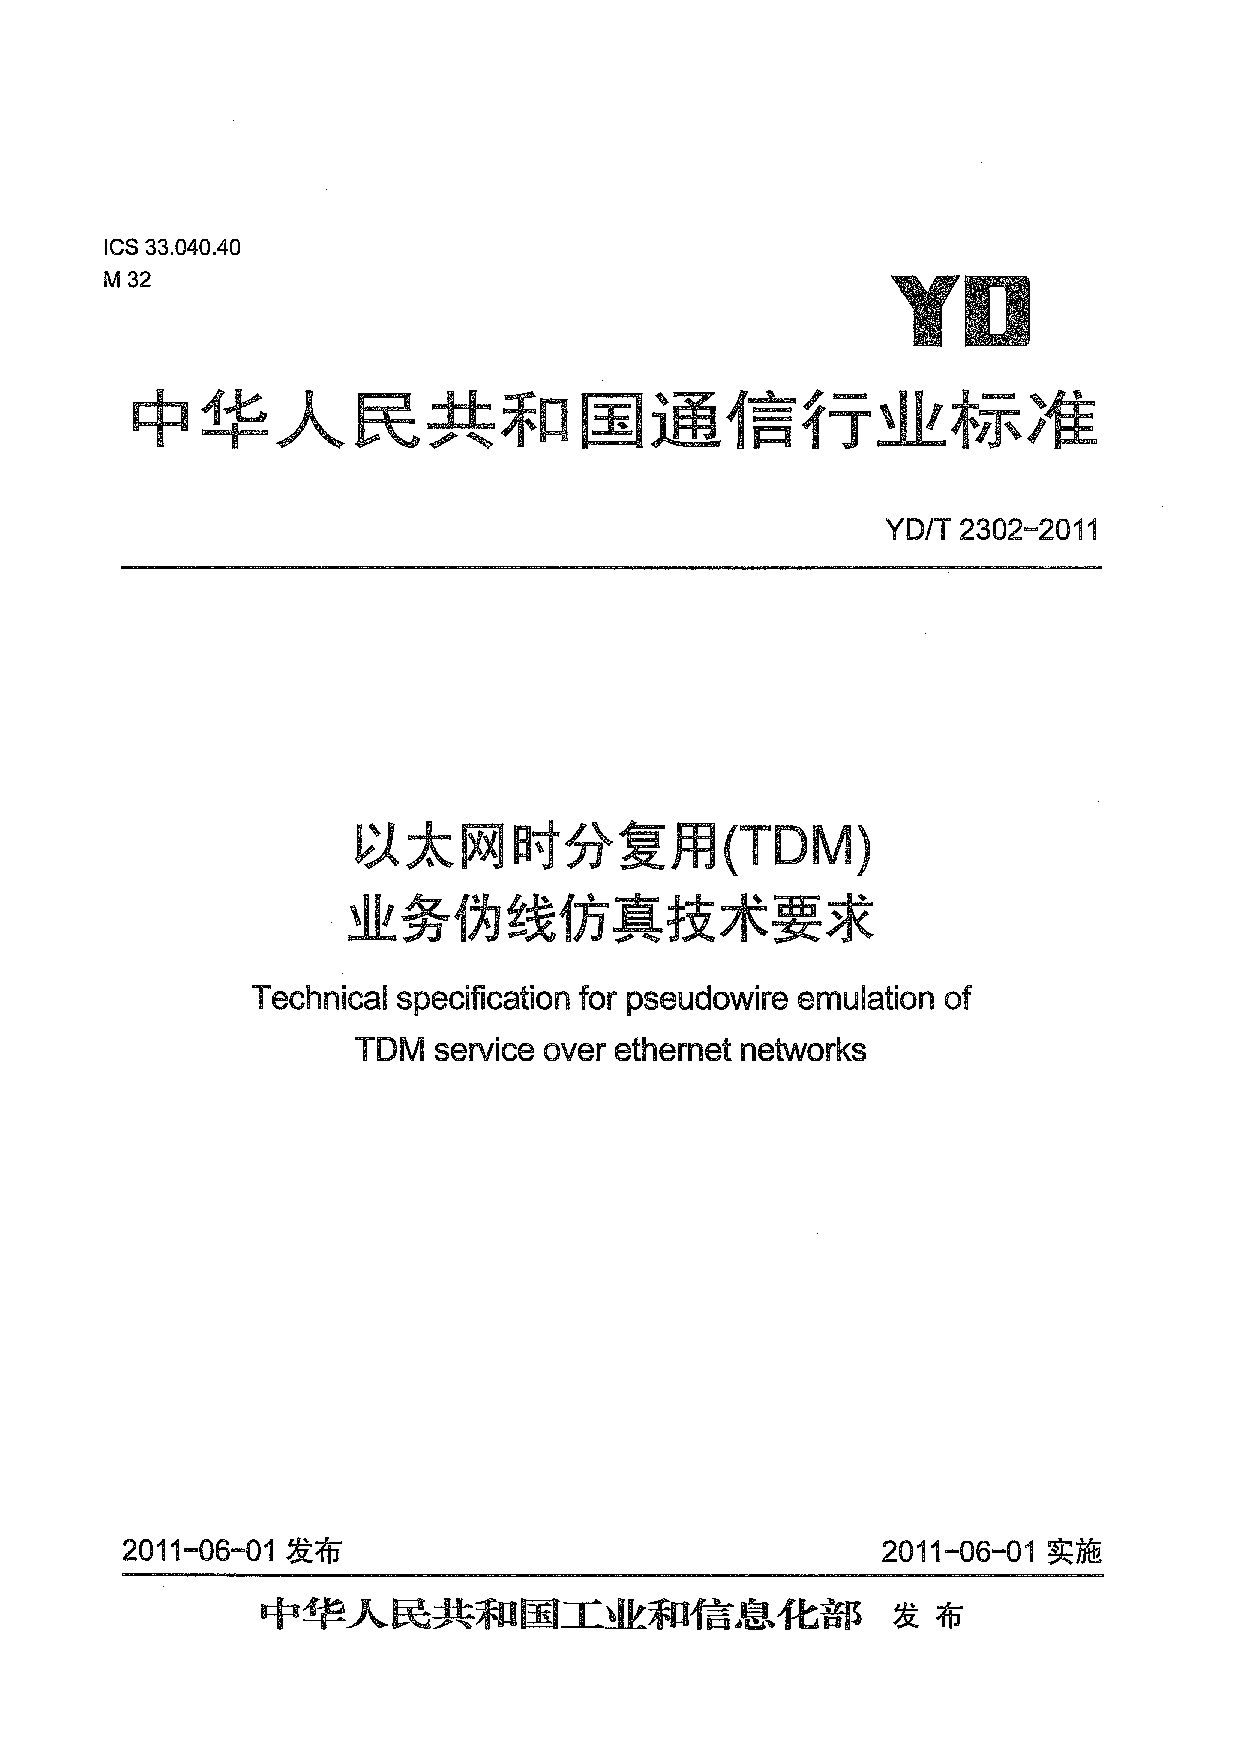 YD/T 2302-2011封面图